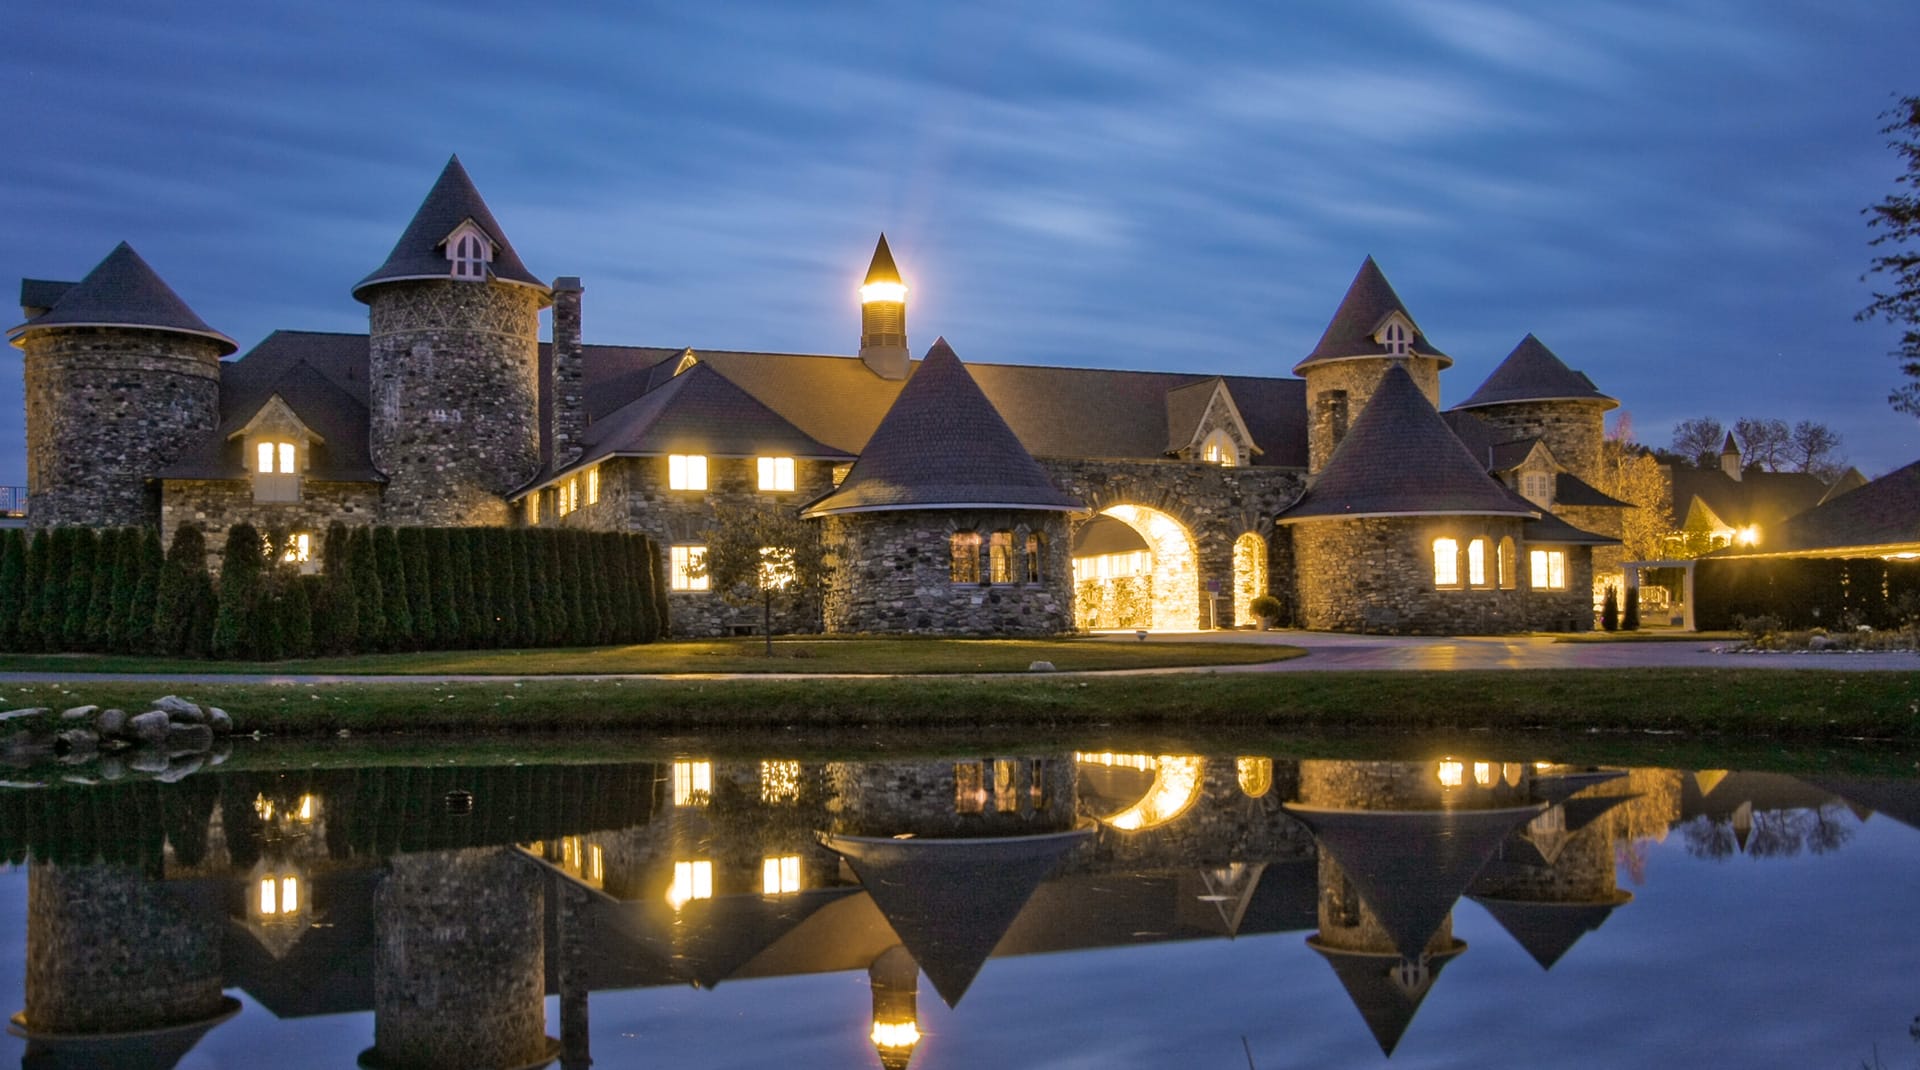  Michigan  Weddings  and Events Venue  Castle Farms